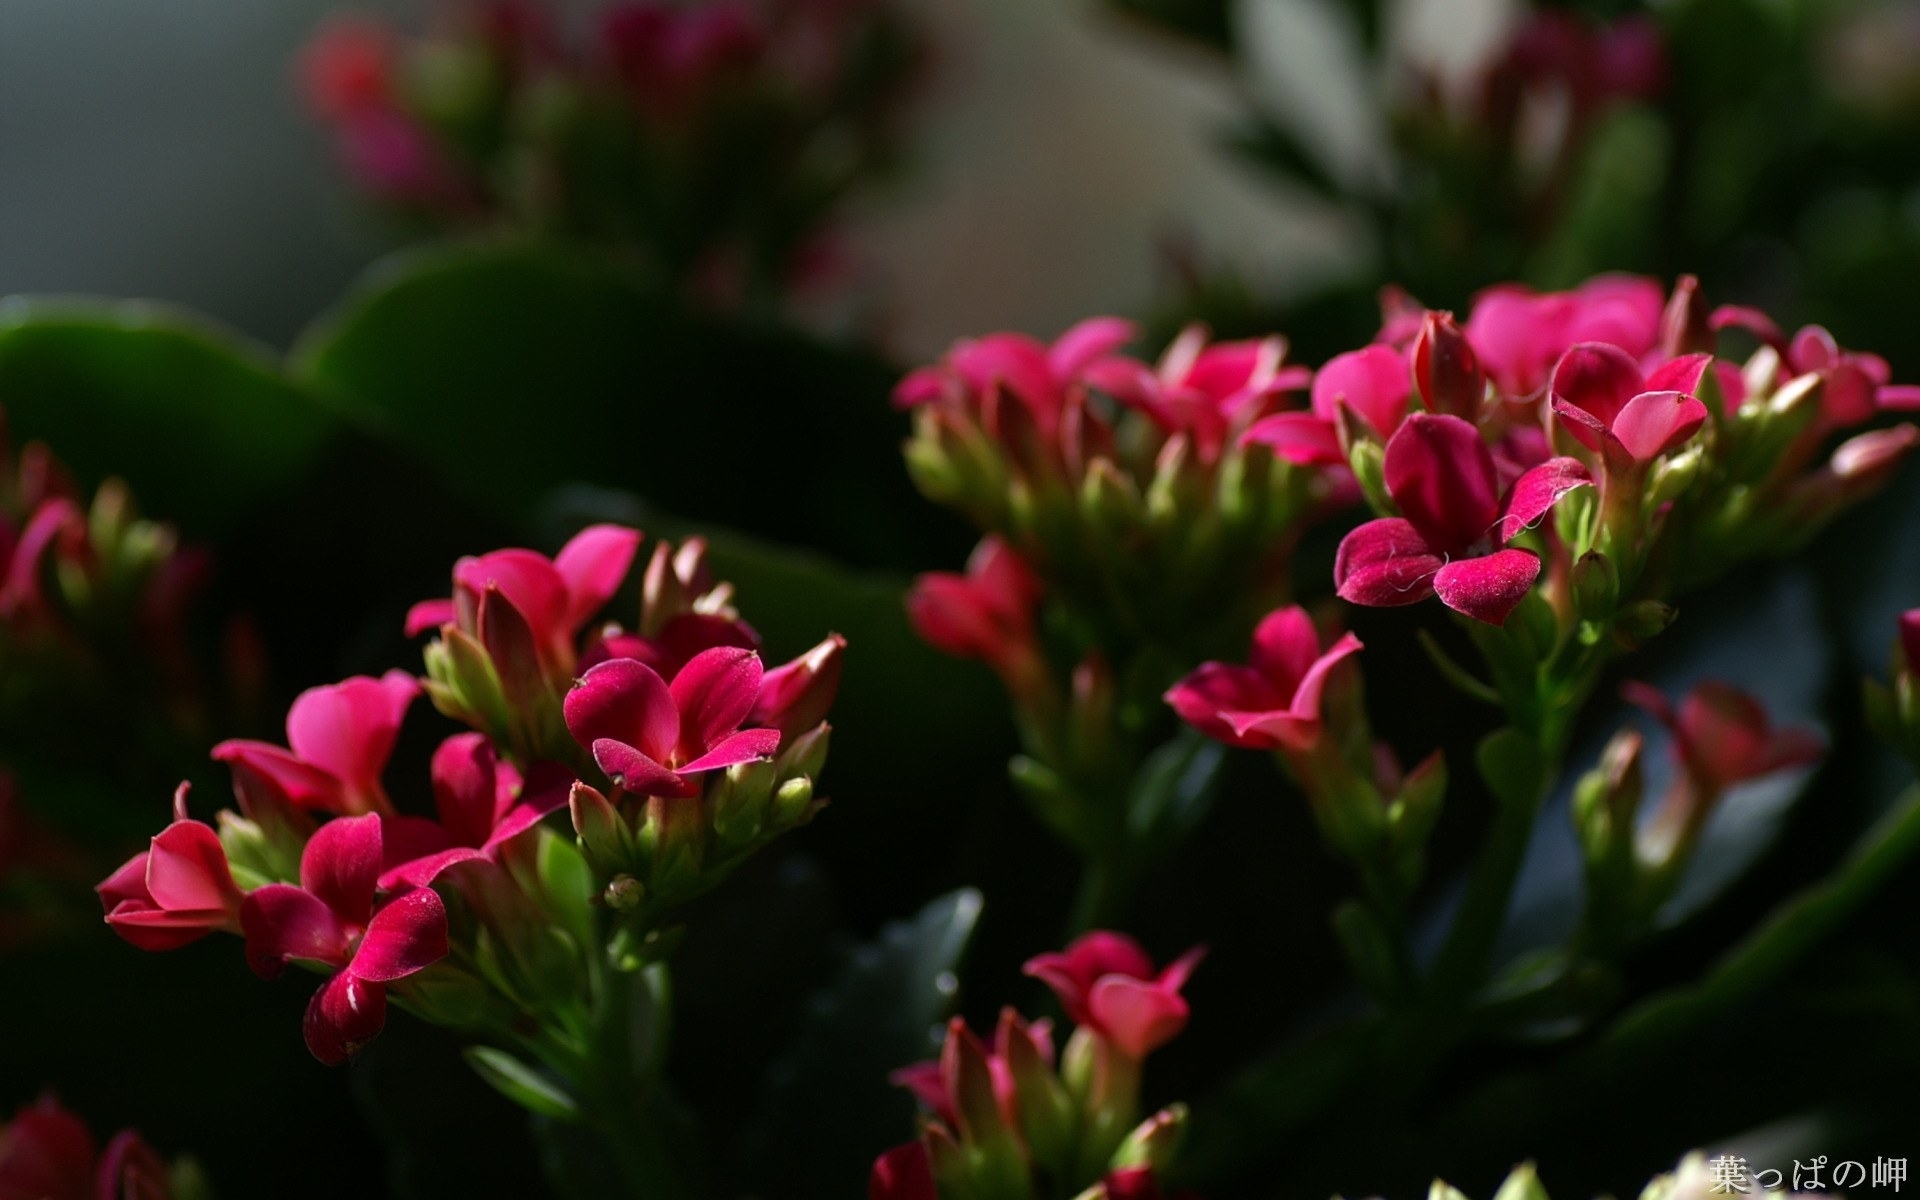 Descarga gratuita de fondo de pantalla para móvil de Flores, Plantas.